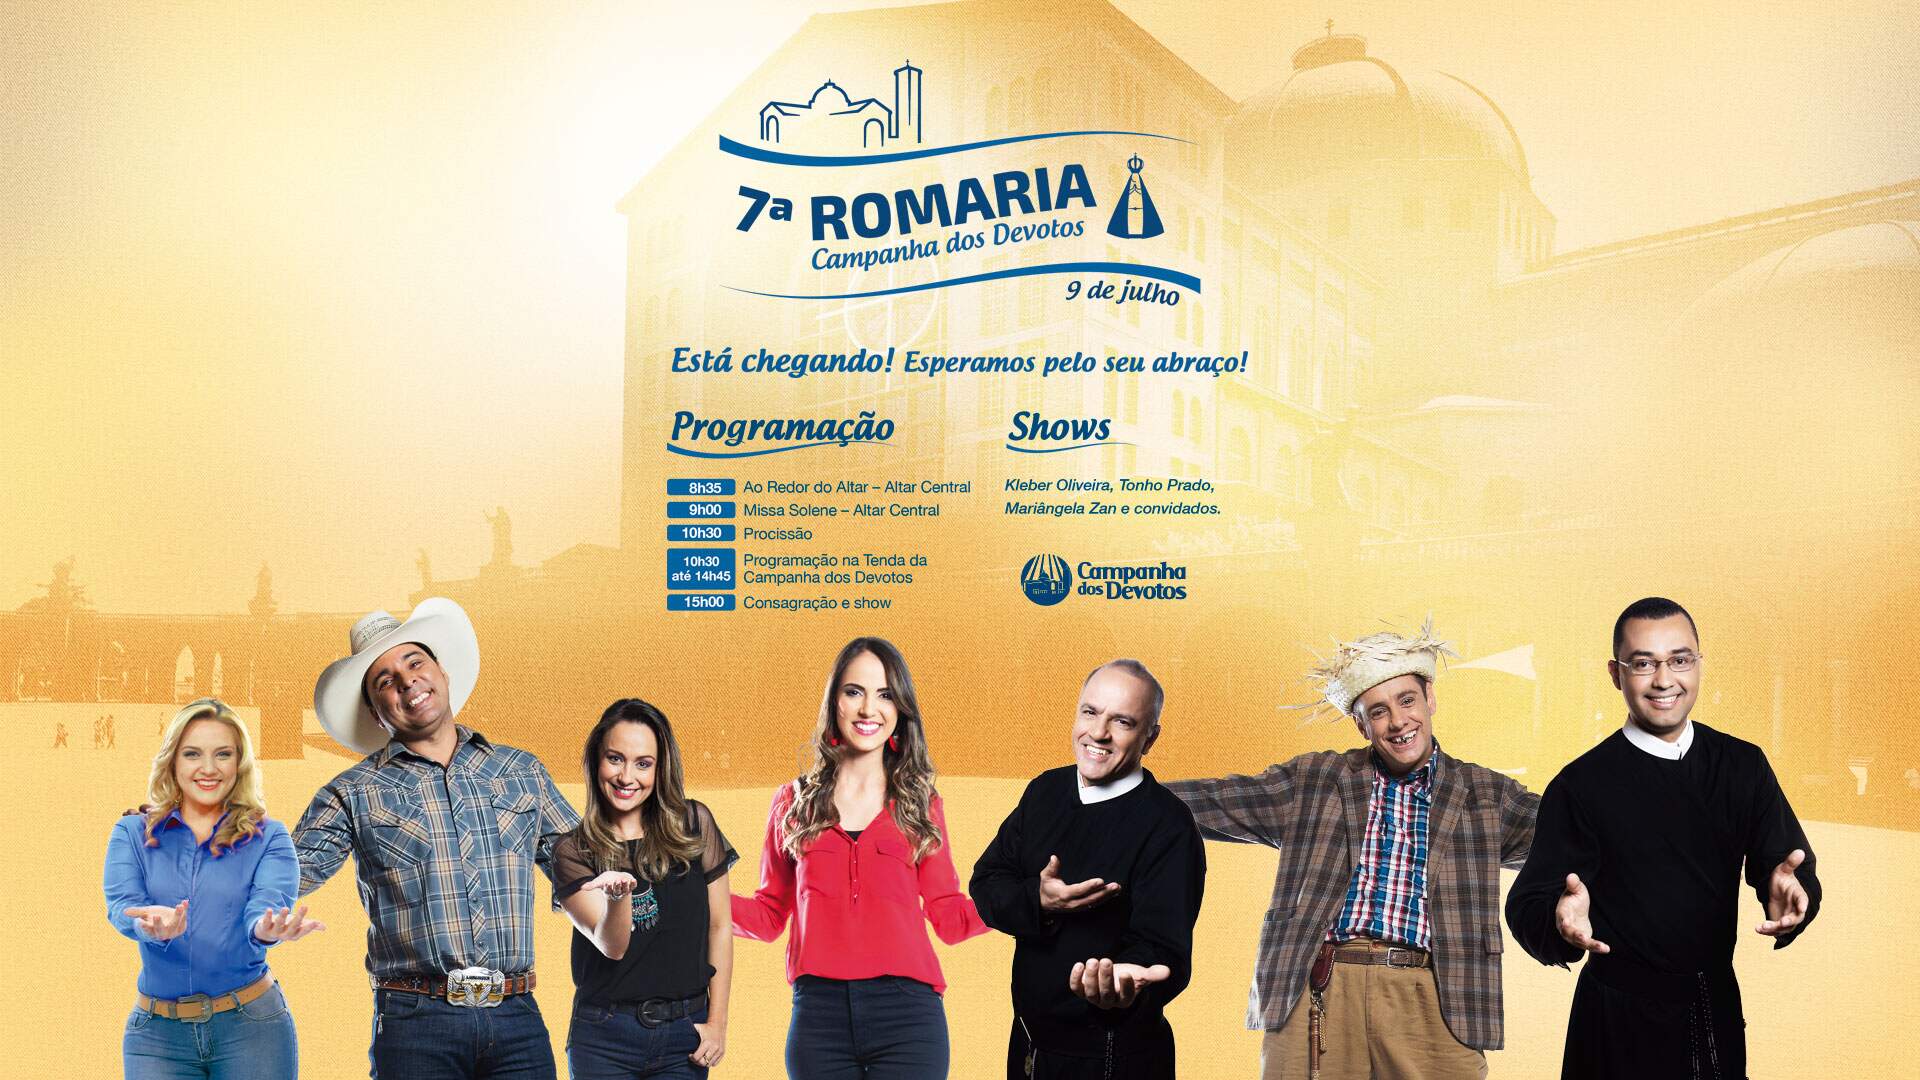 7_romaria_programacao